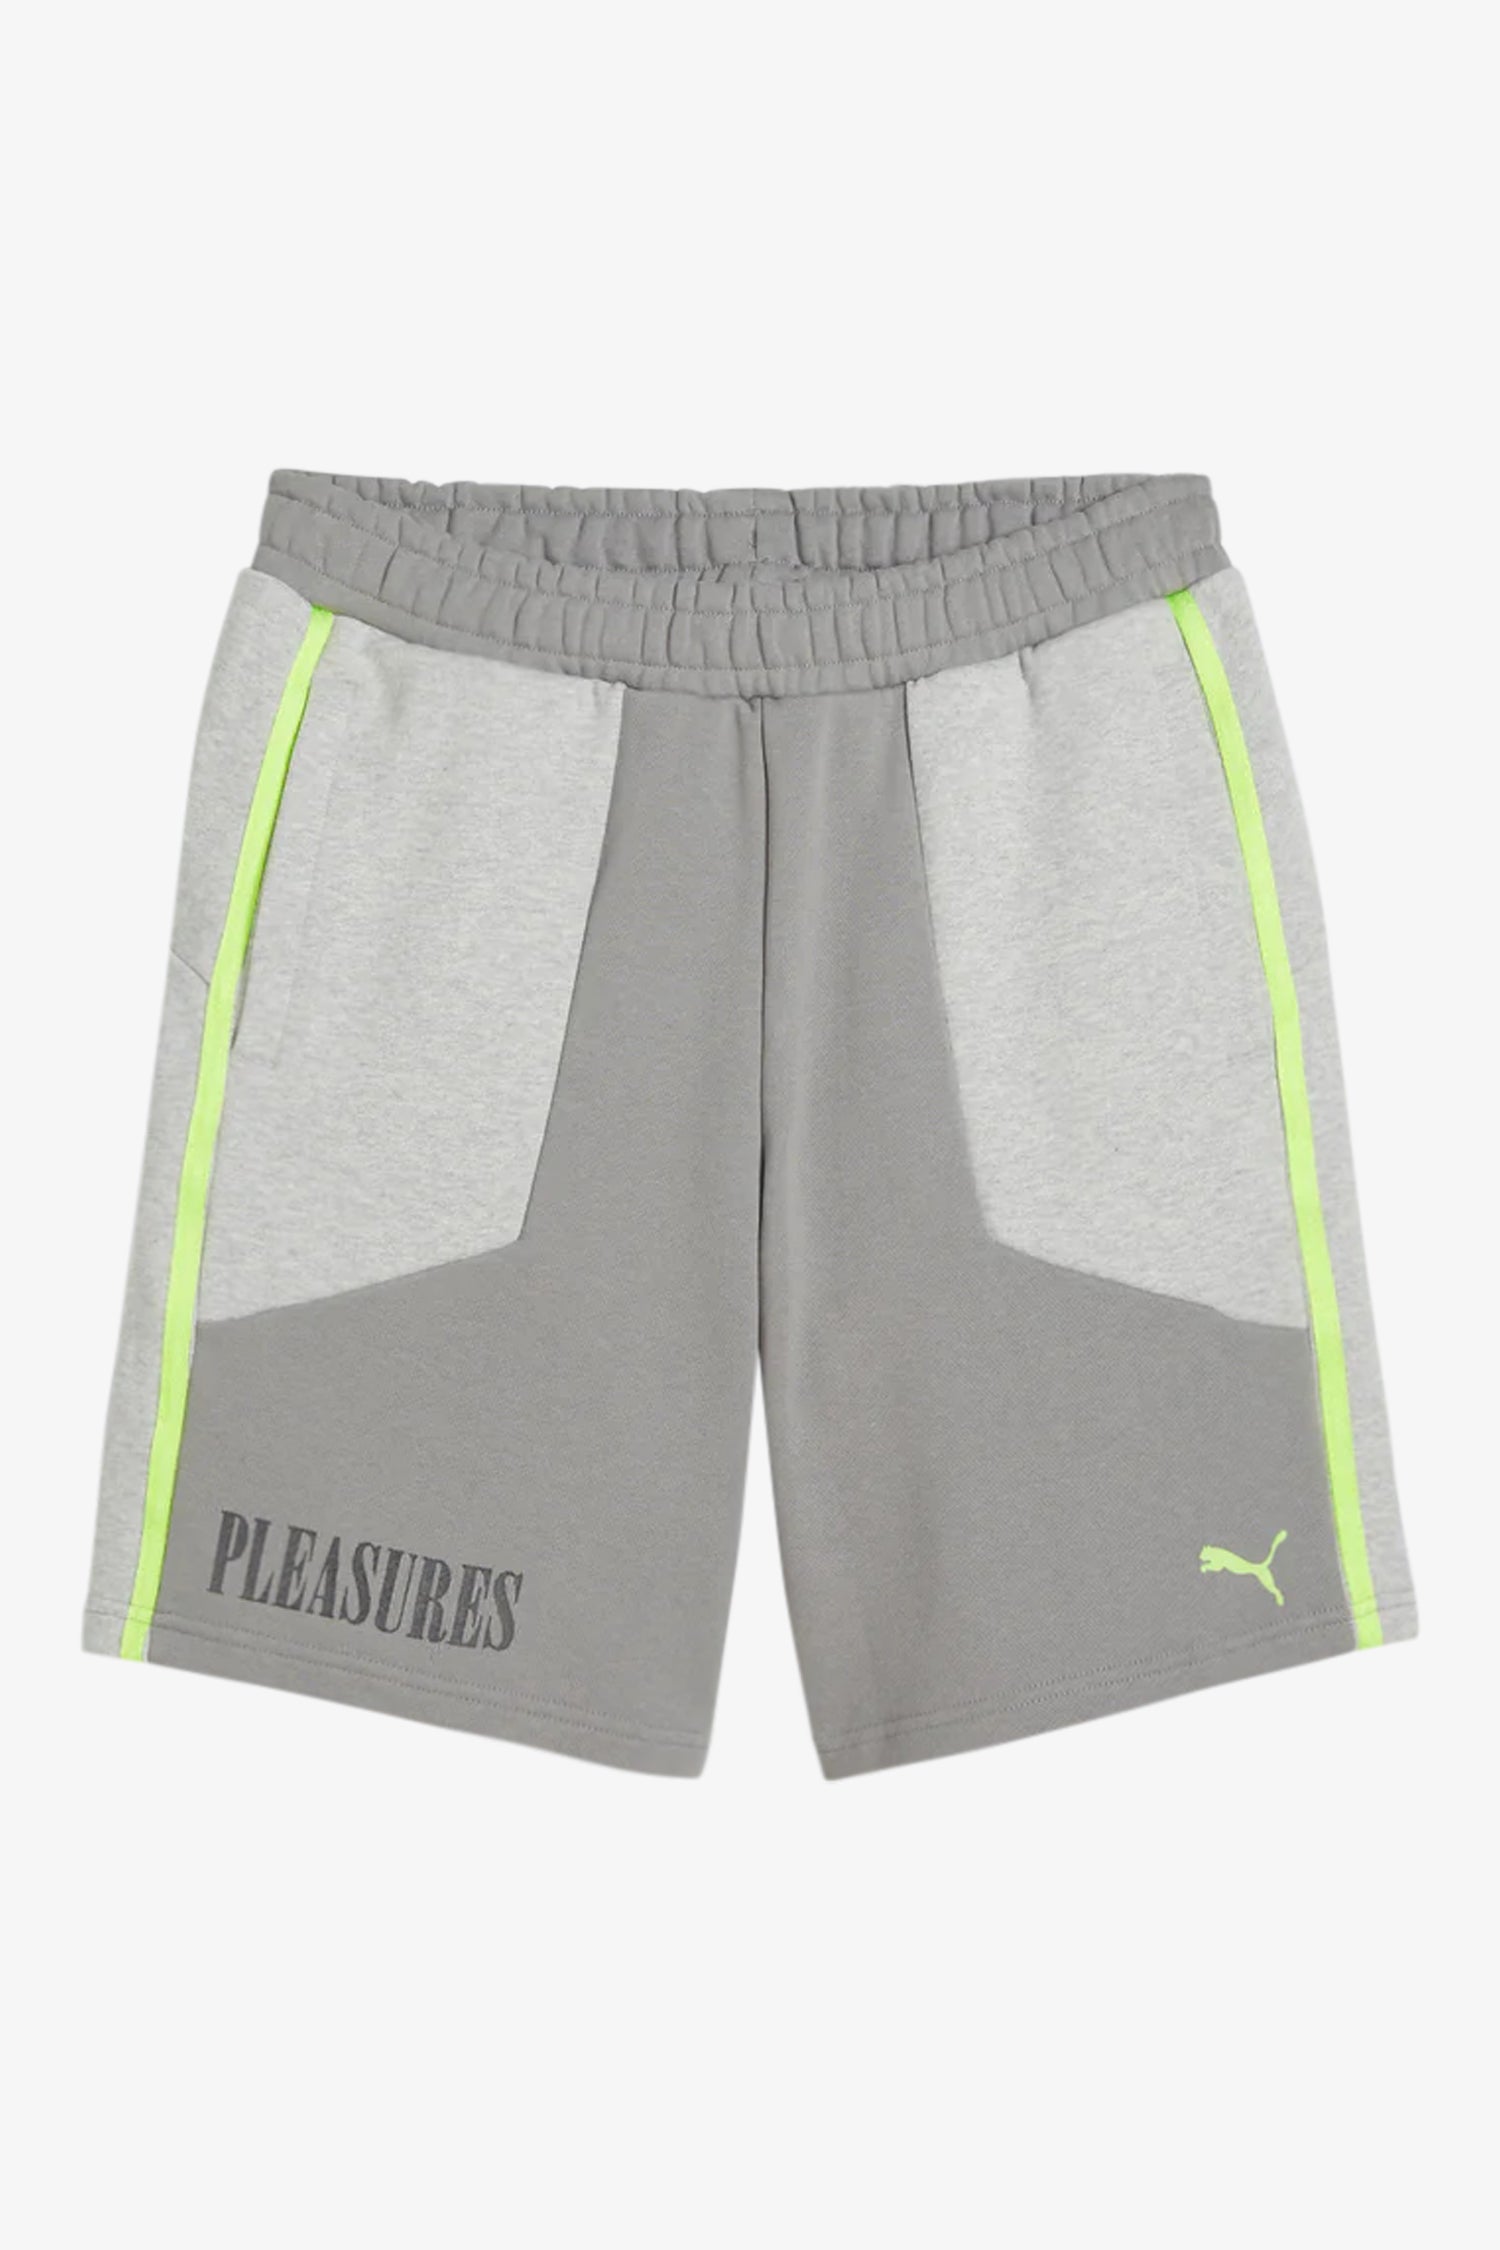 Pleasures Shorts- Selectshop FRAME